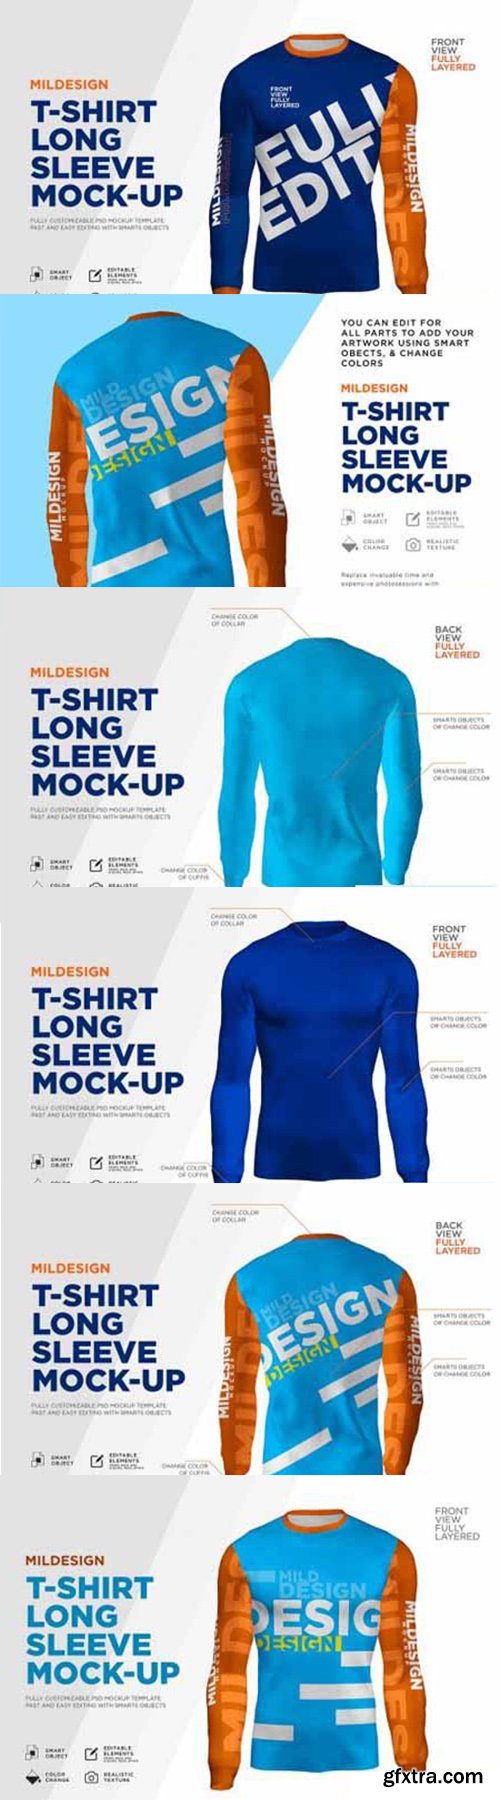 CreativeMarket - T-Shirt Long Sleeve Mockups 4377062